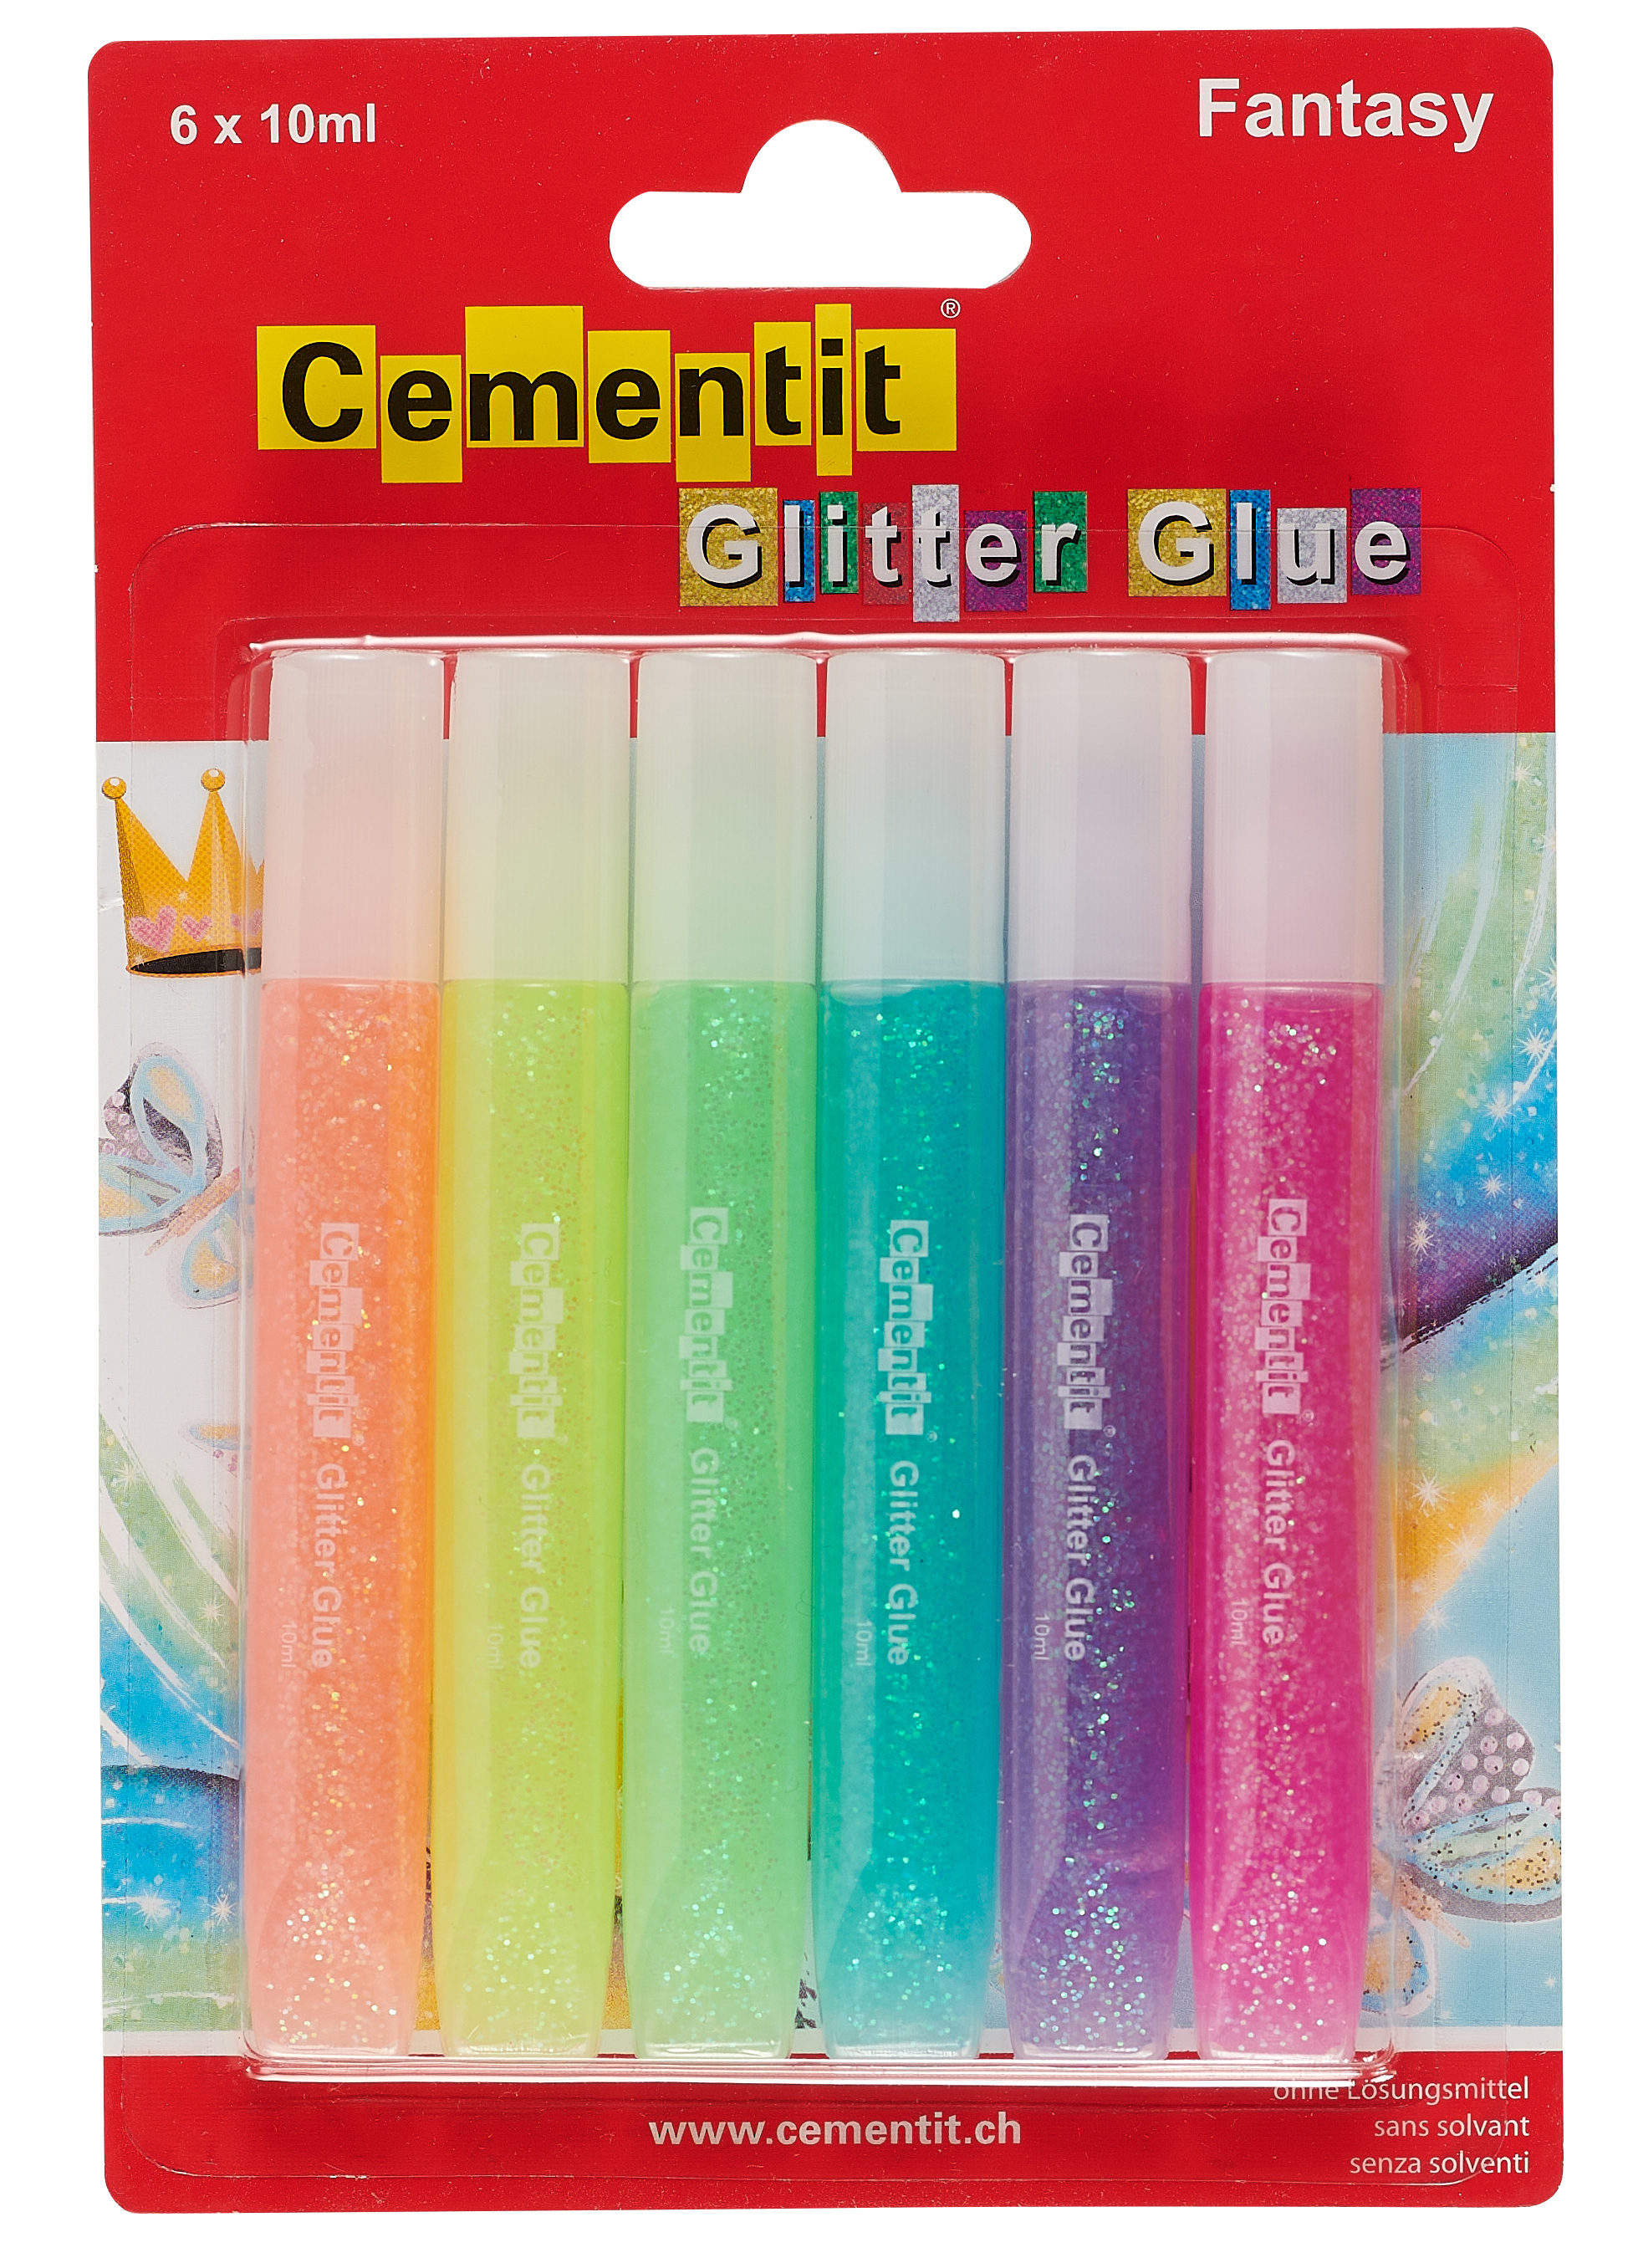 CEMENTIT Glitter Glue Fantasy 52.015.20 6x10ml